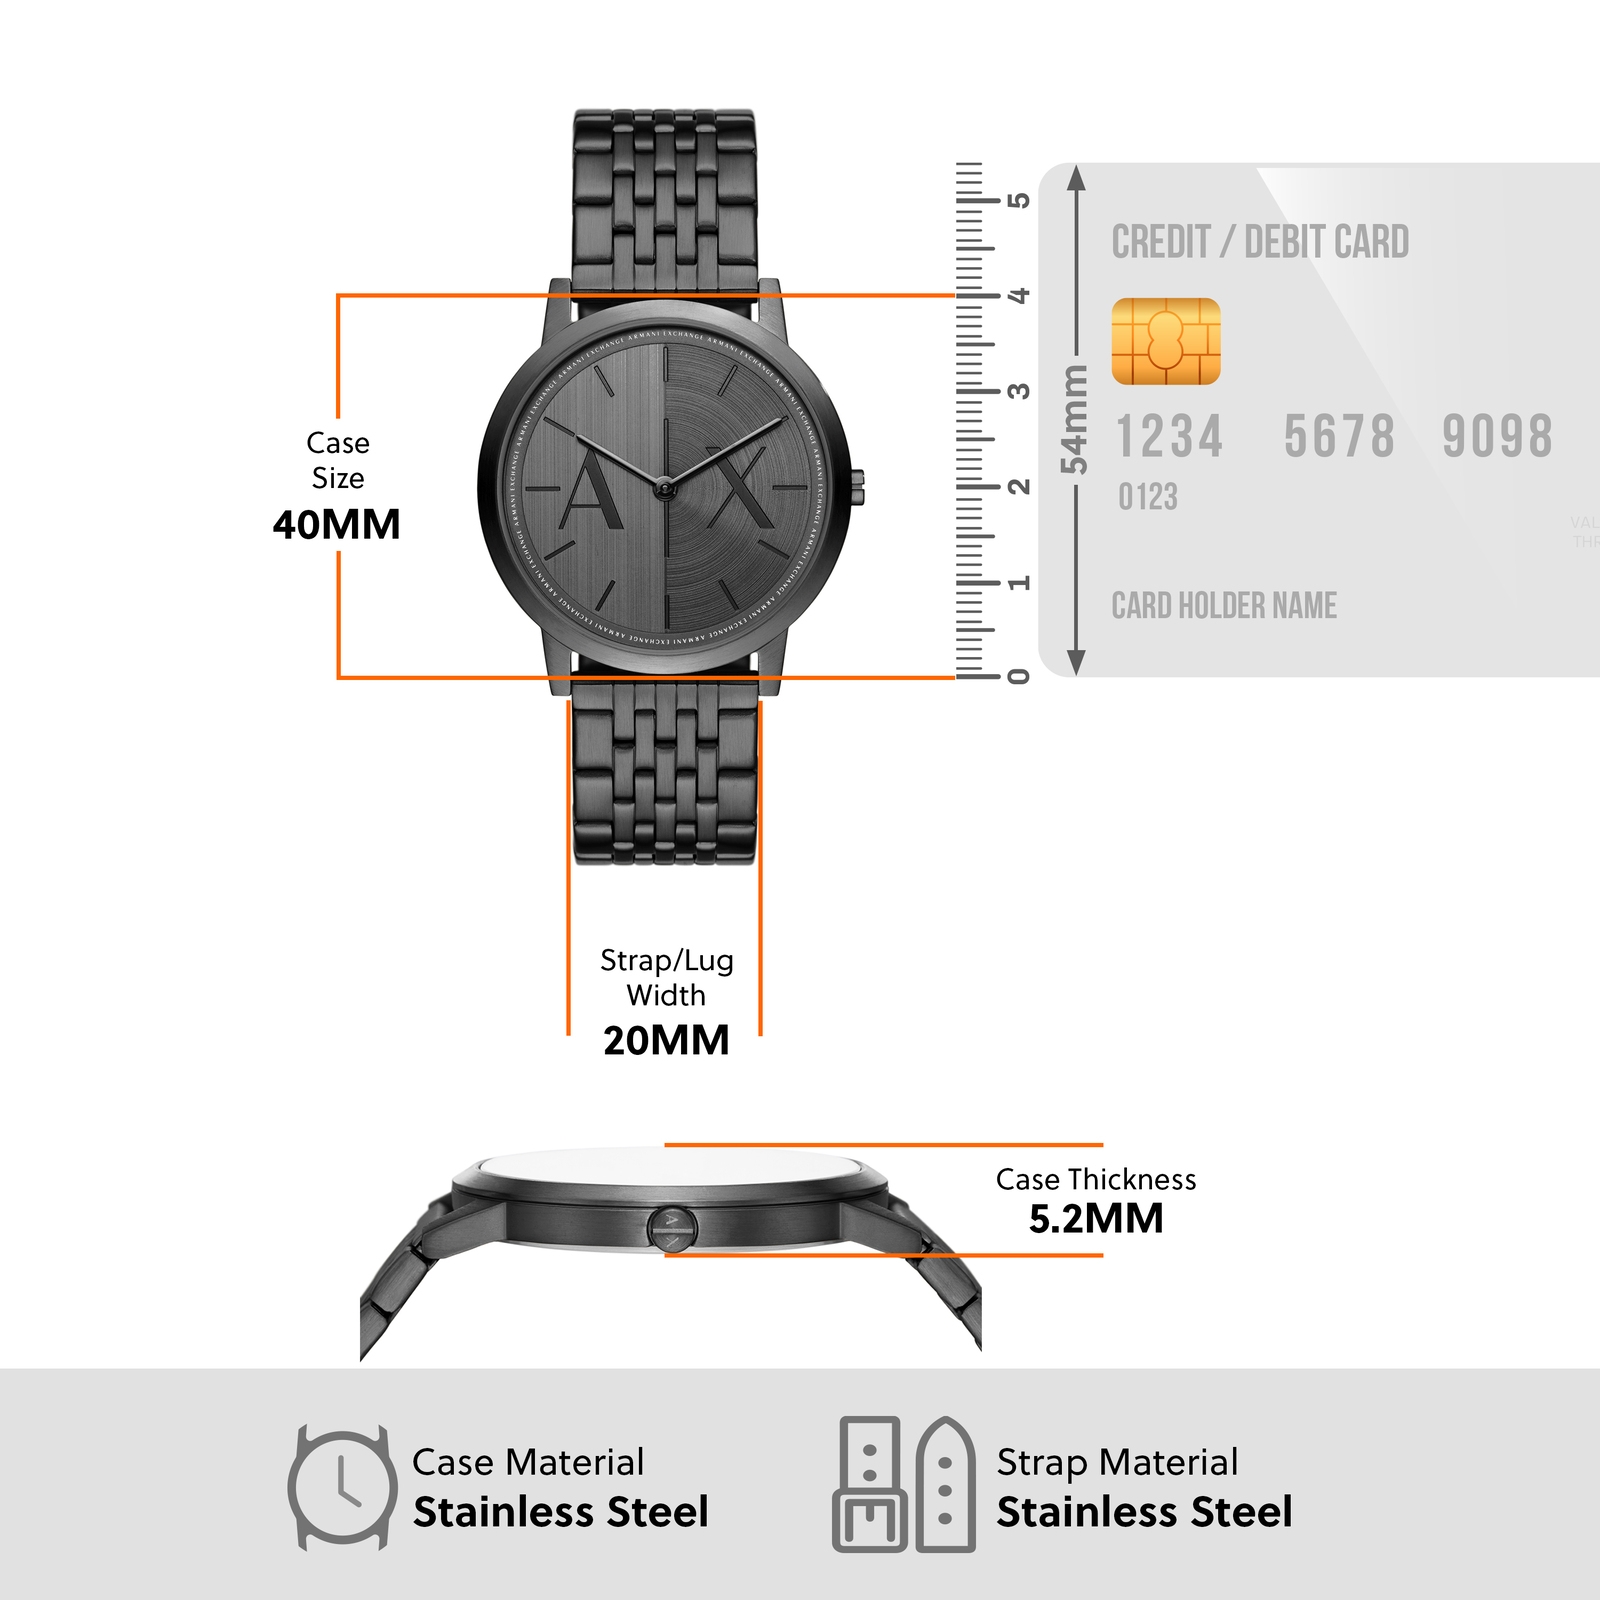 Armani Exchange Black Watch AX2872